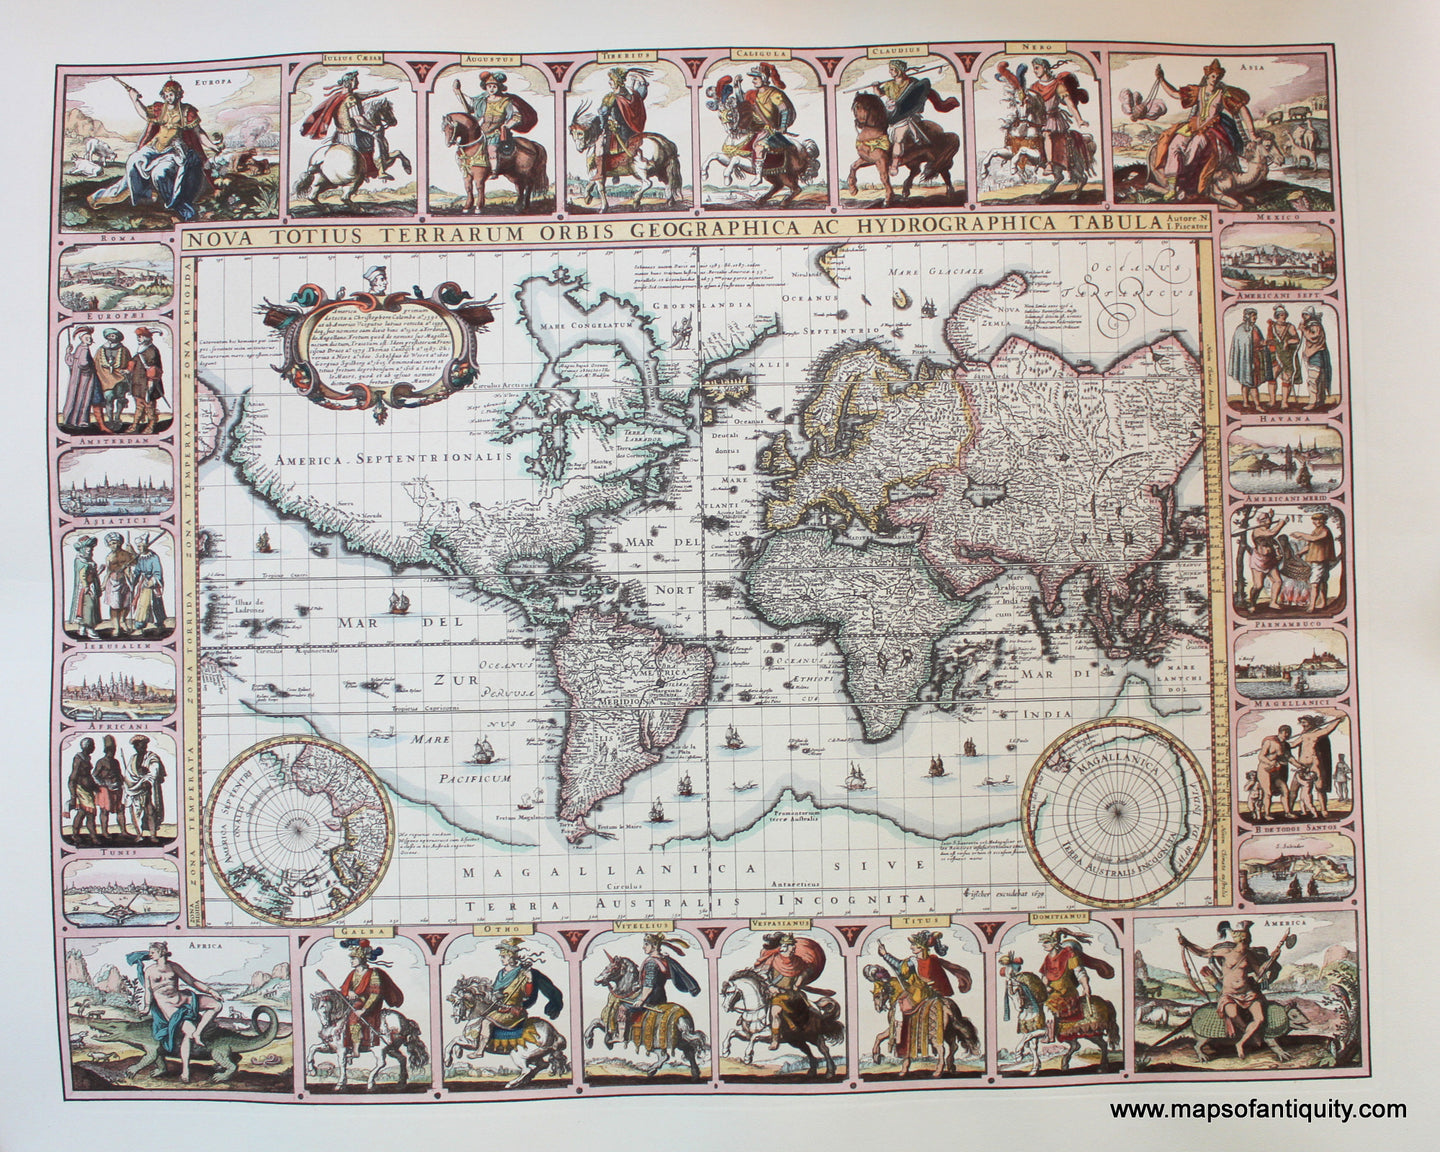 Reproduction-Reproductions-Antique-Map-of-World-Globe-Nova-Totius-Terrarum-Orbis-Geographica-ac-Hydrographica-Tabula-Visscher-Maps-of-Antiquity